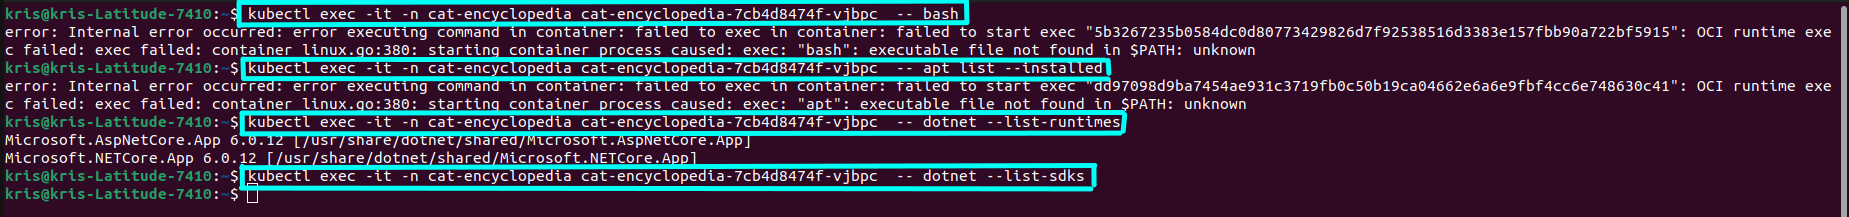 Screenshot where I attempt to run some shell commands towards runnign ASP.NET 6 Chiseled Ubuntu image